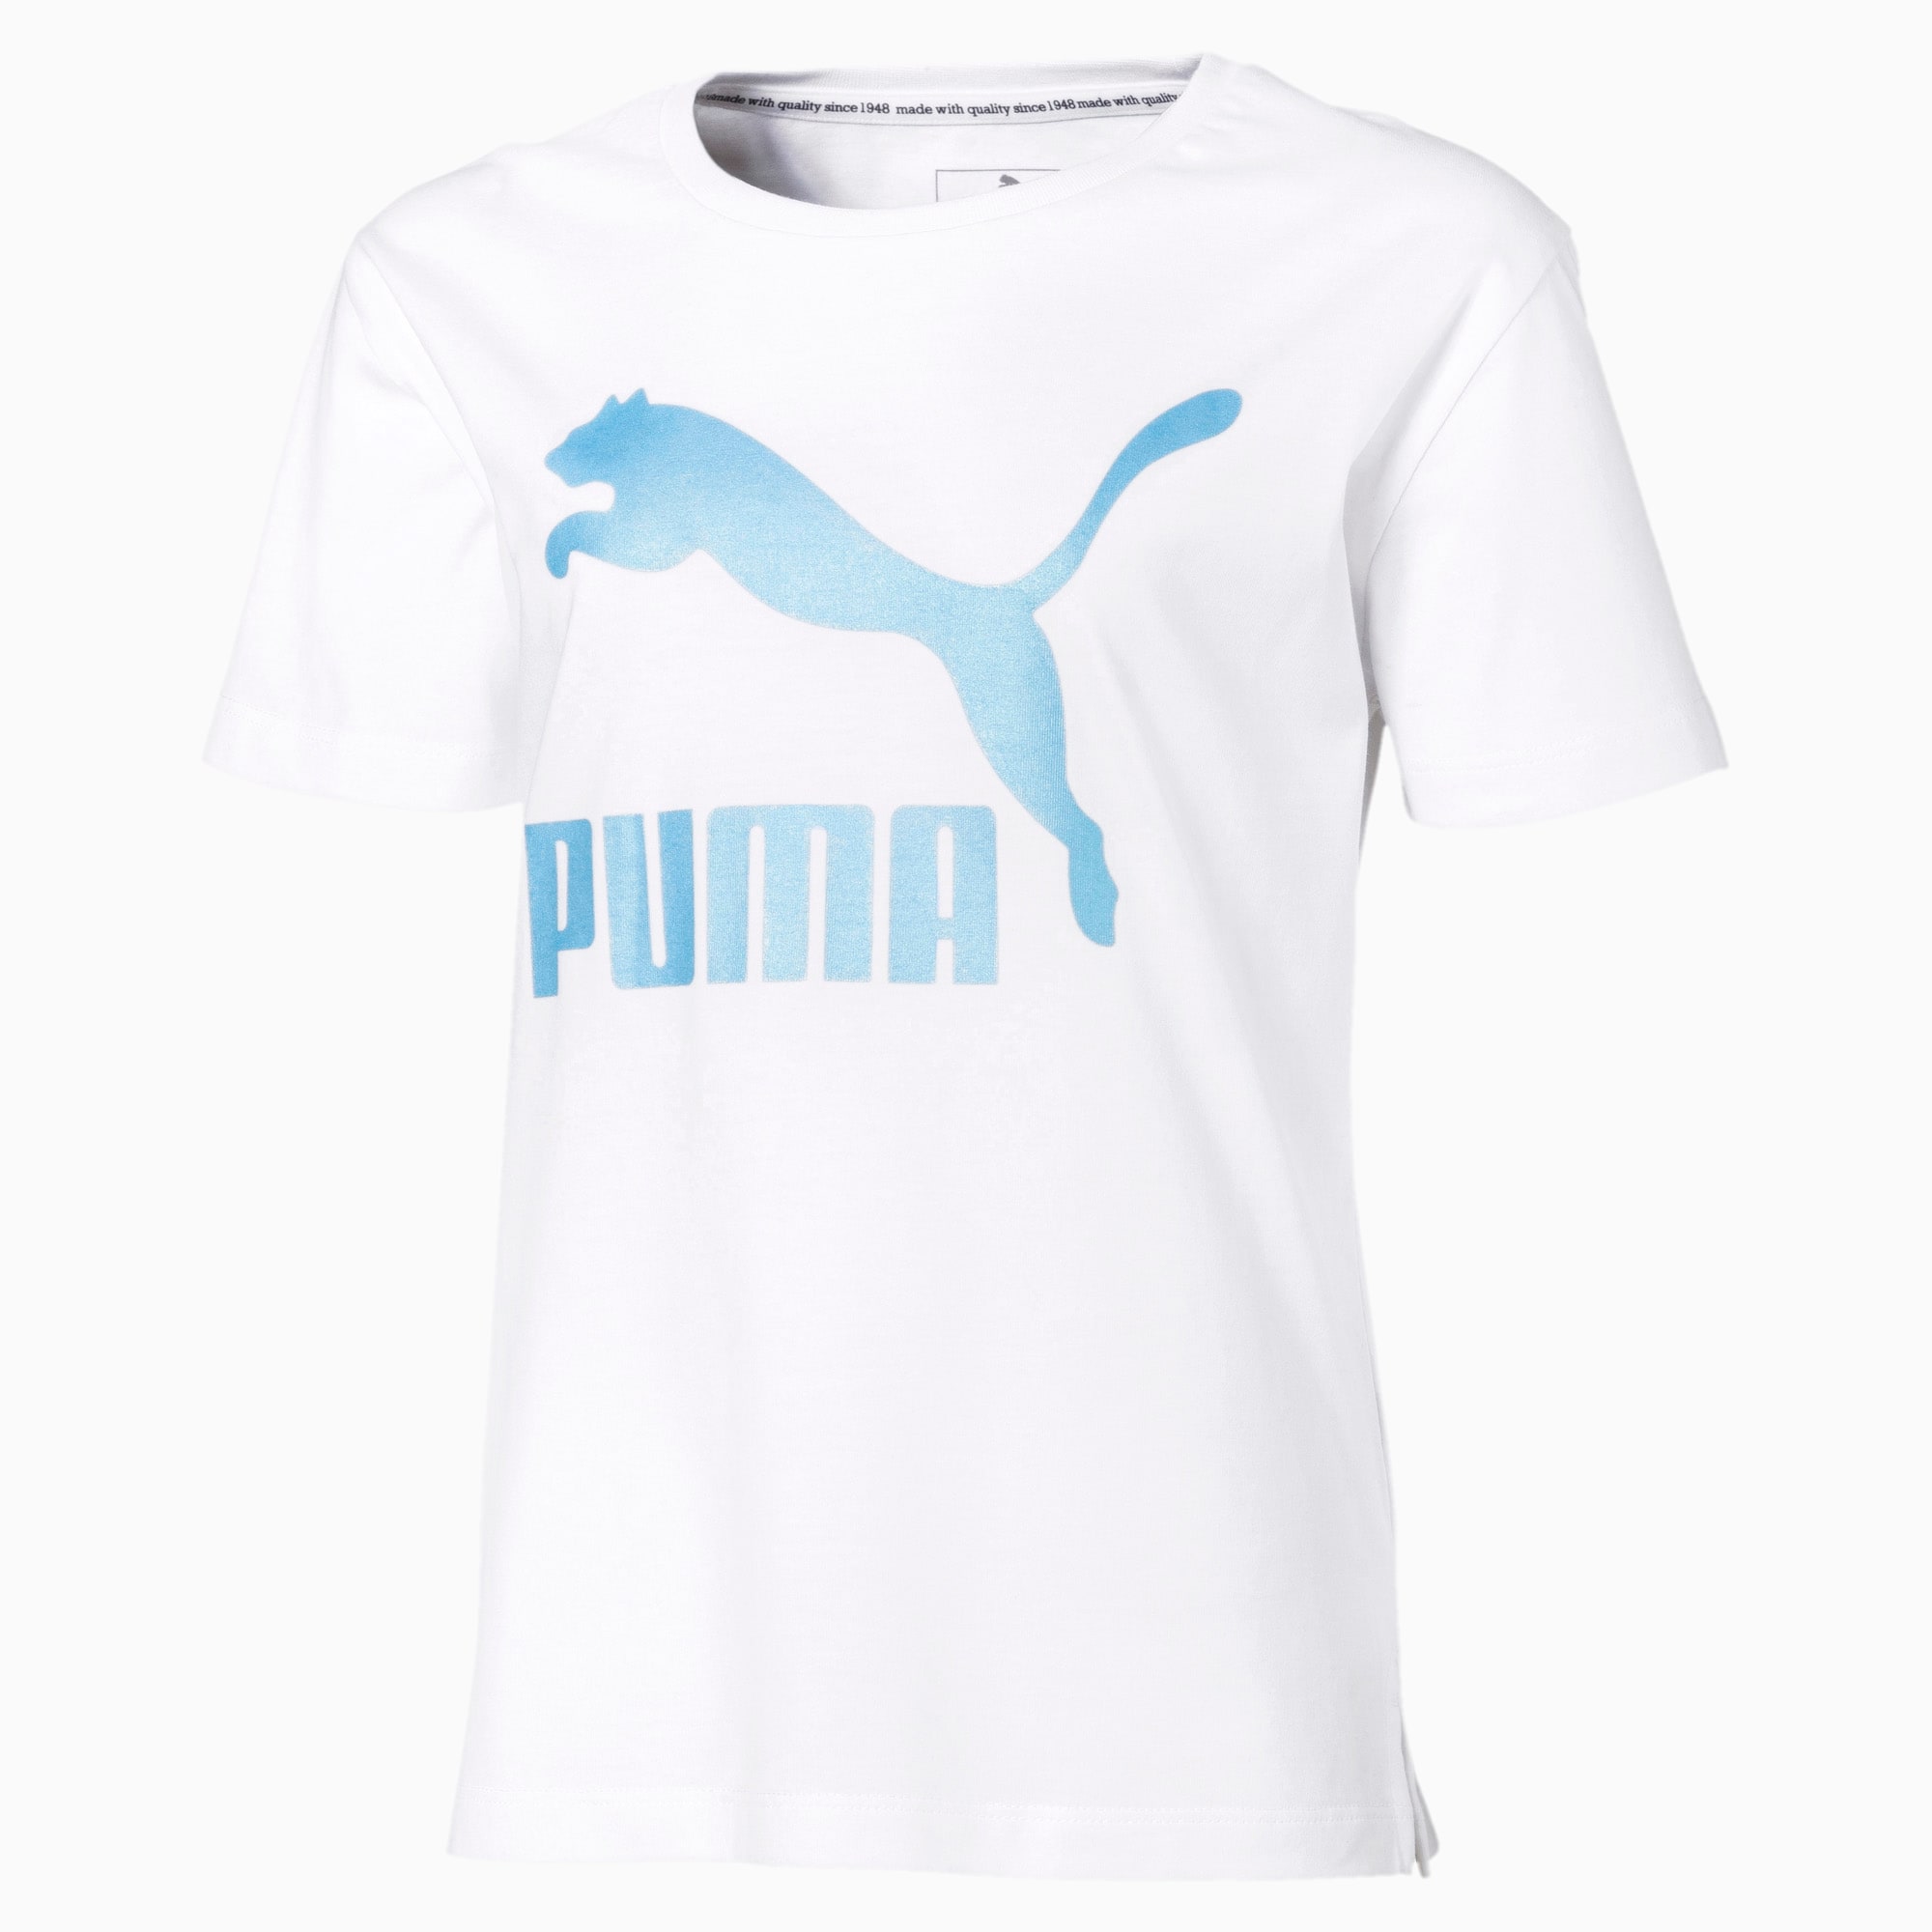 puma made with quality since 1948